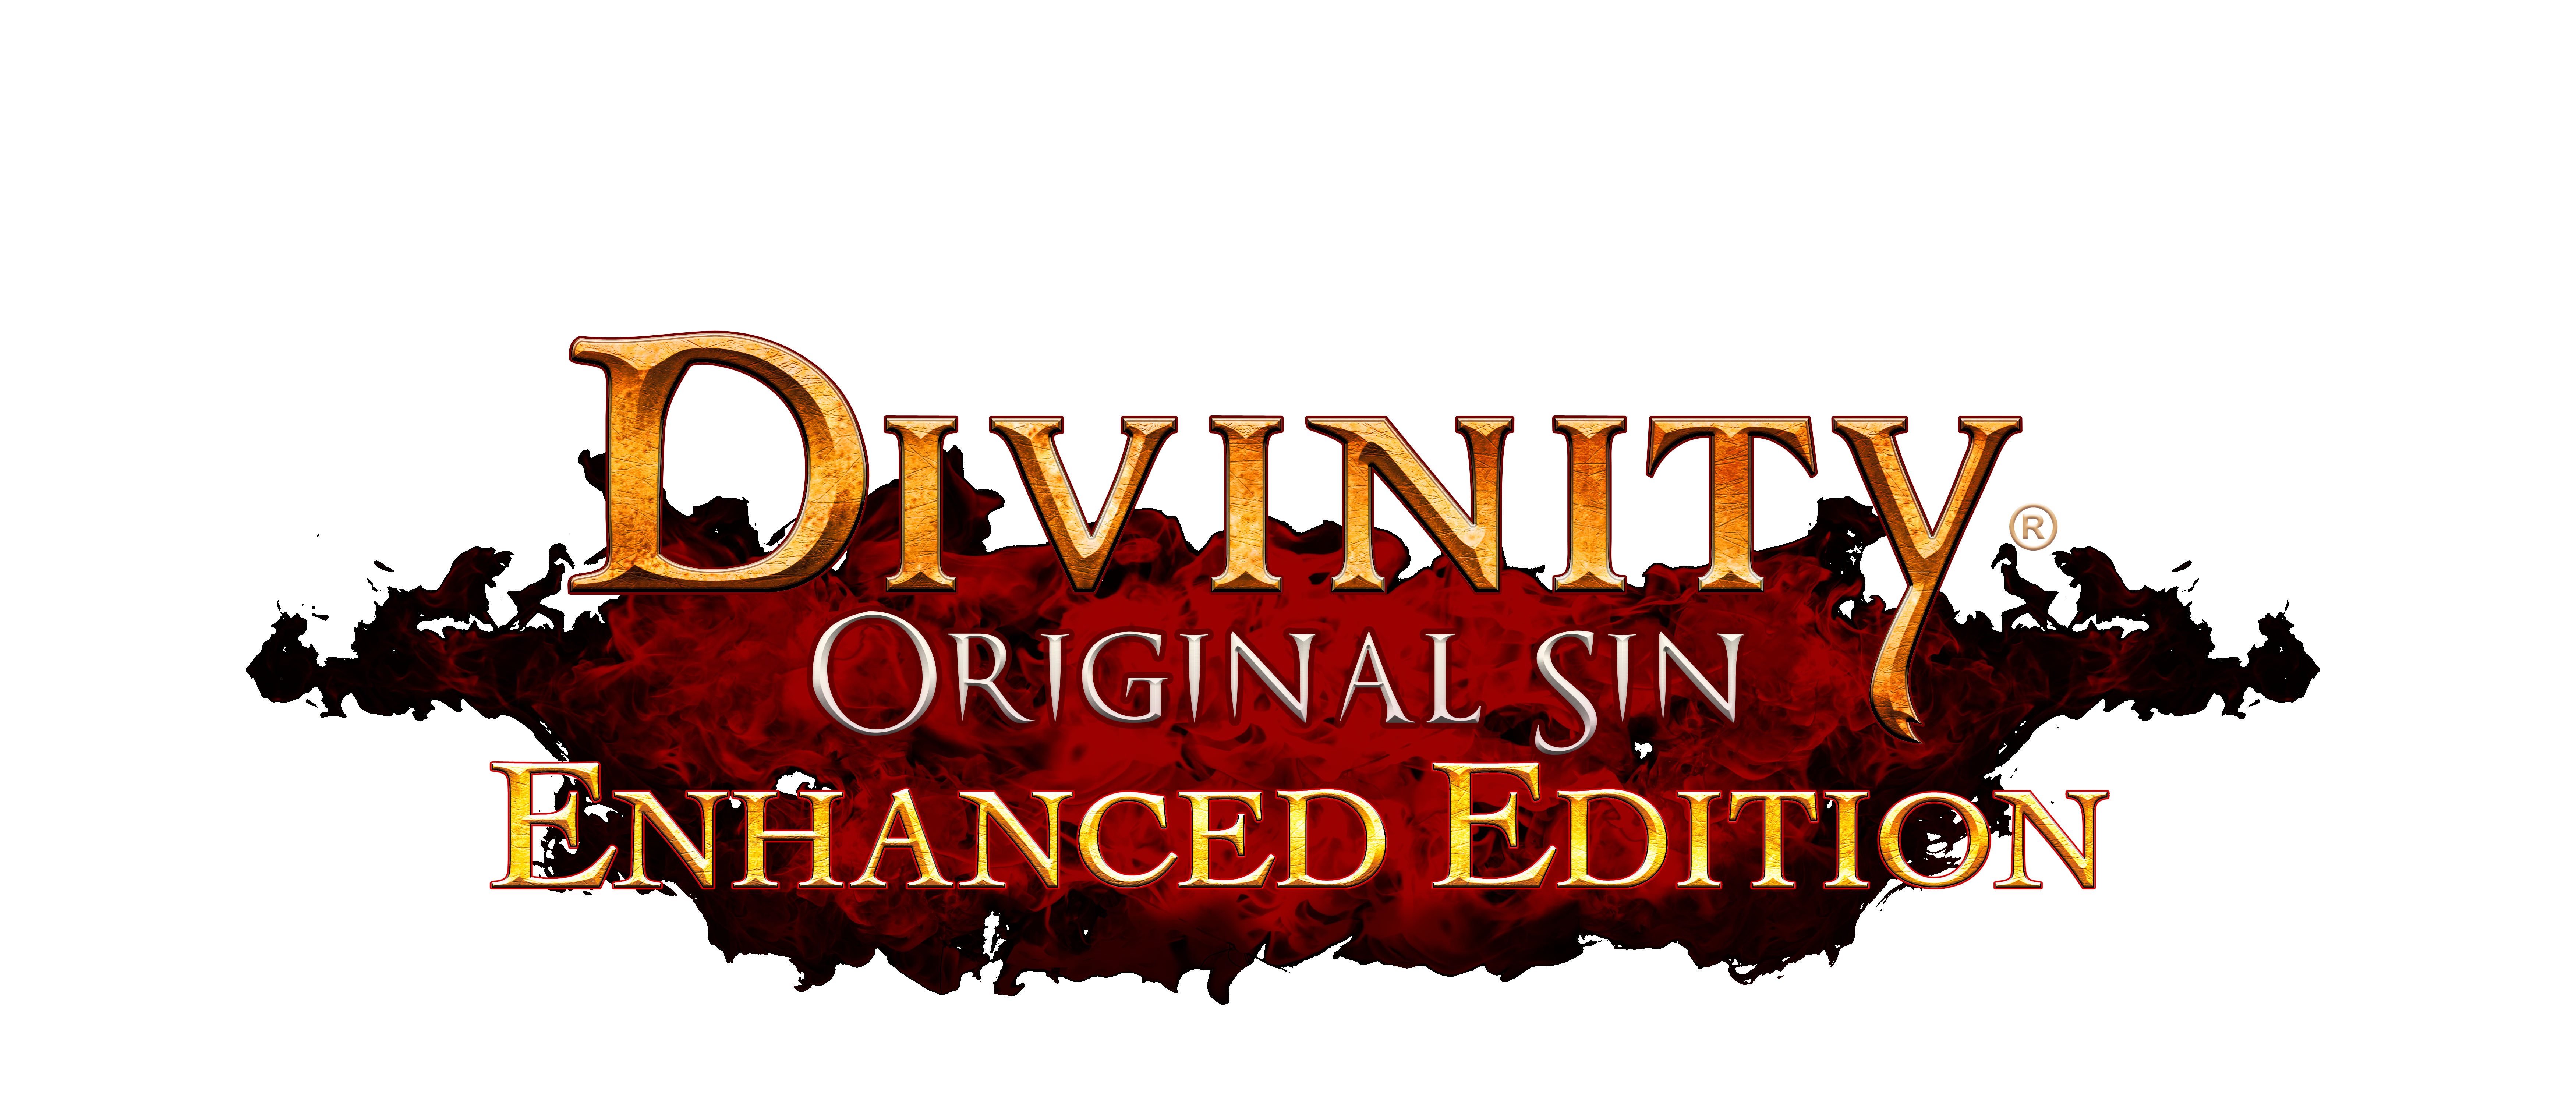 Divinity Original Sin Icon by